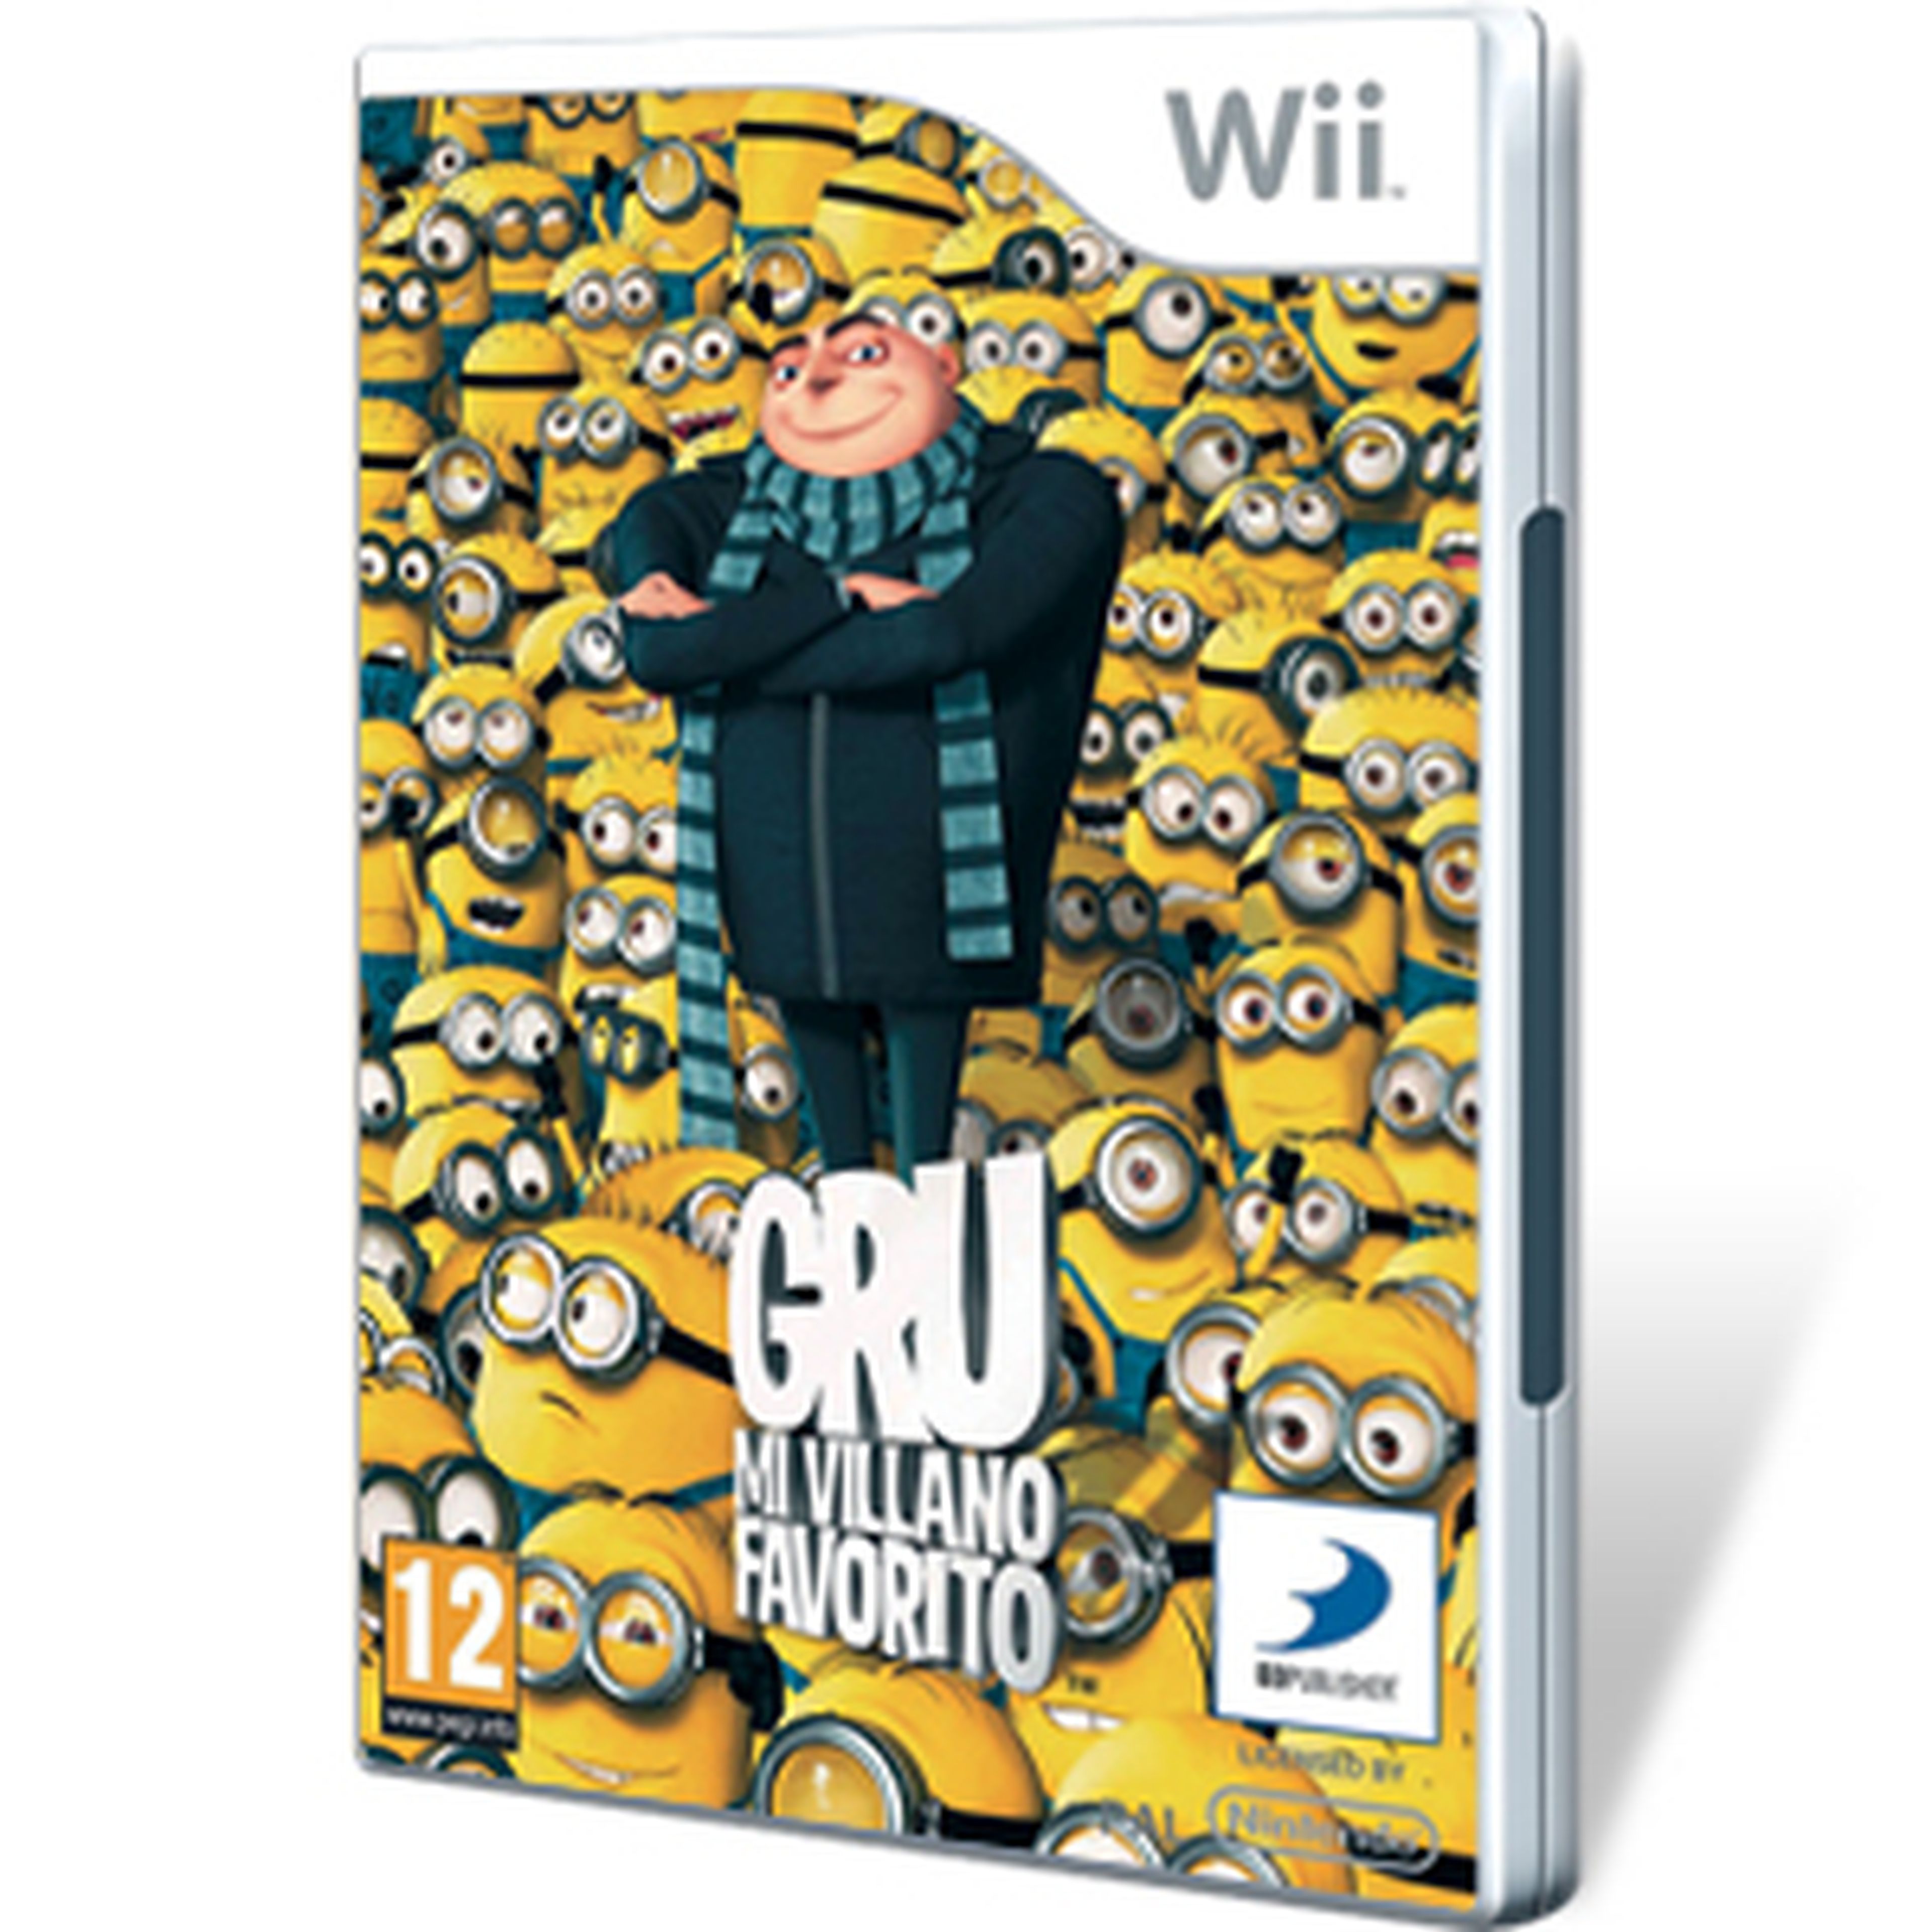 Gru Mi villano favorito para Wii